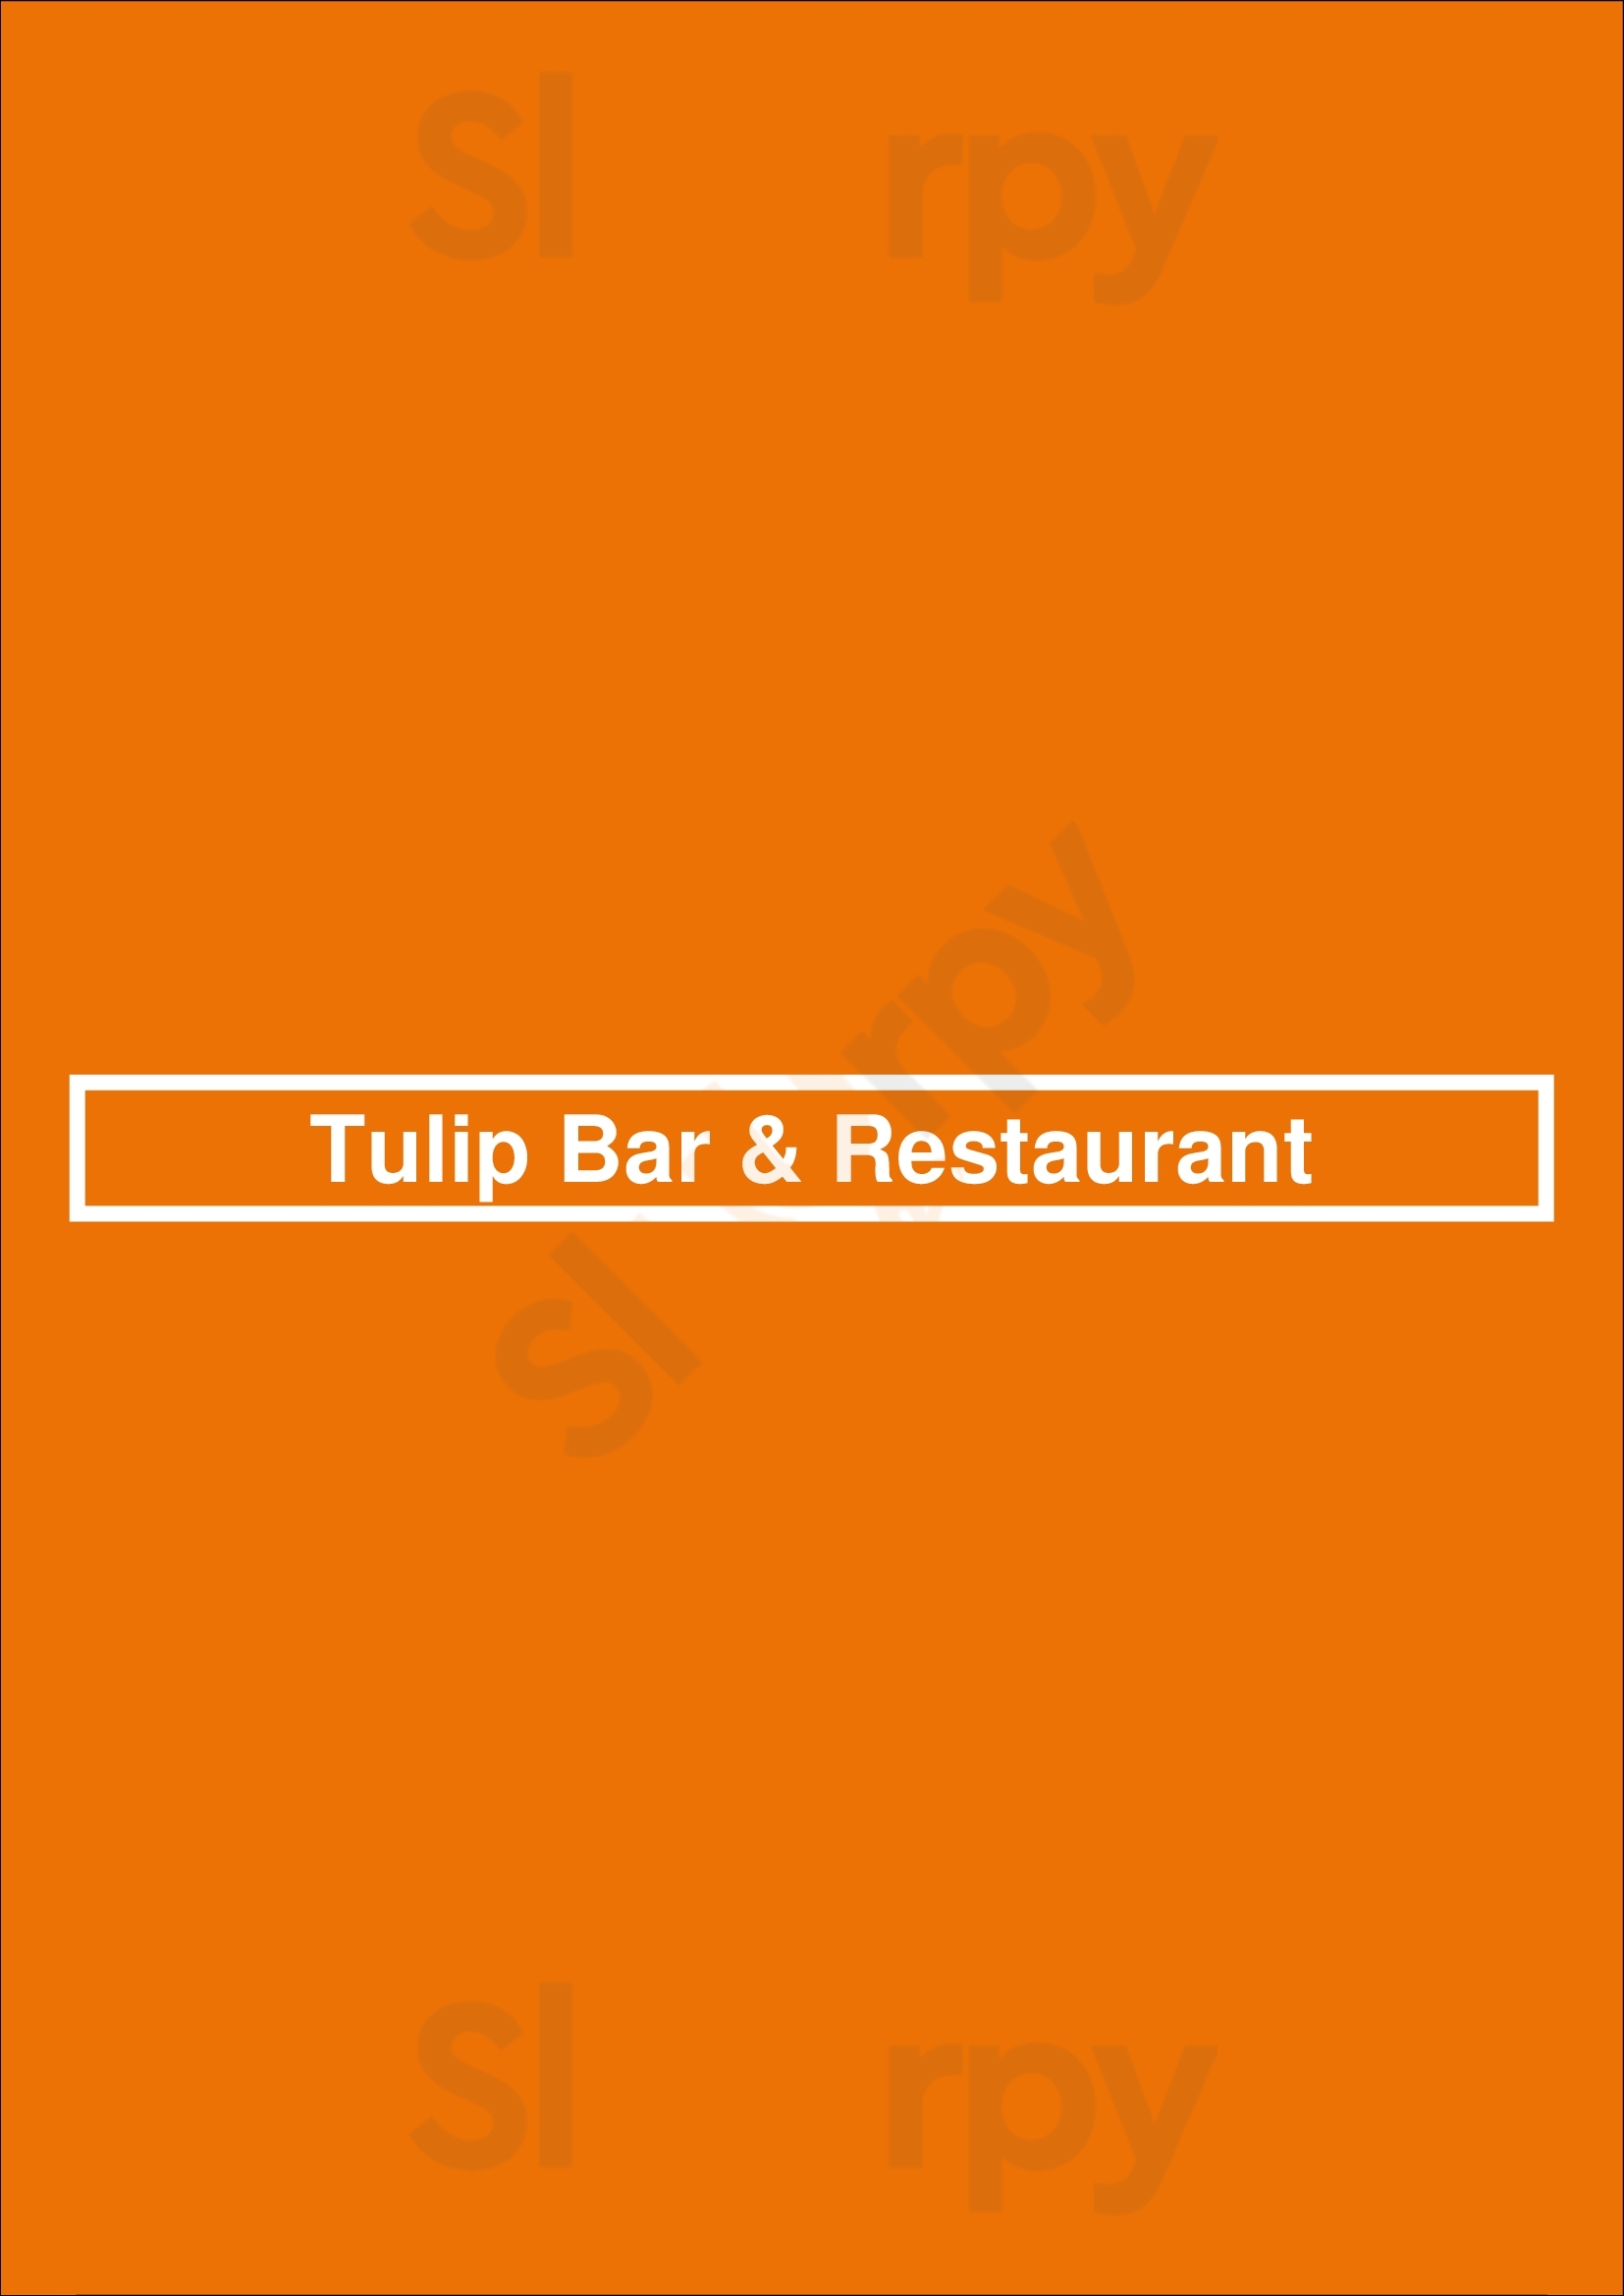 Tulip Bar & Restaurant Geelong Menu - 1